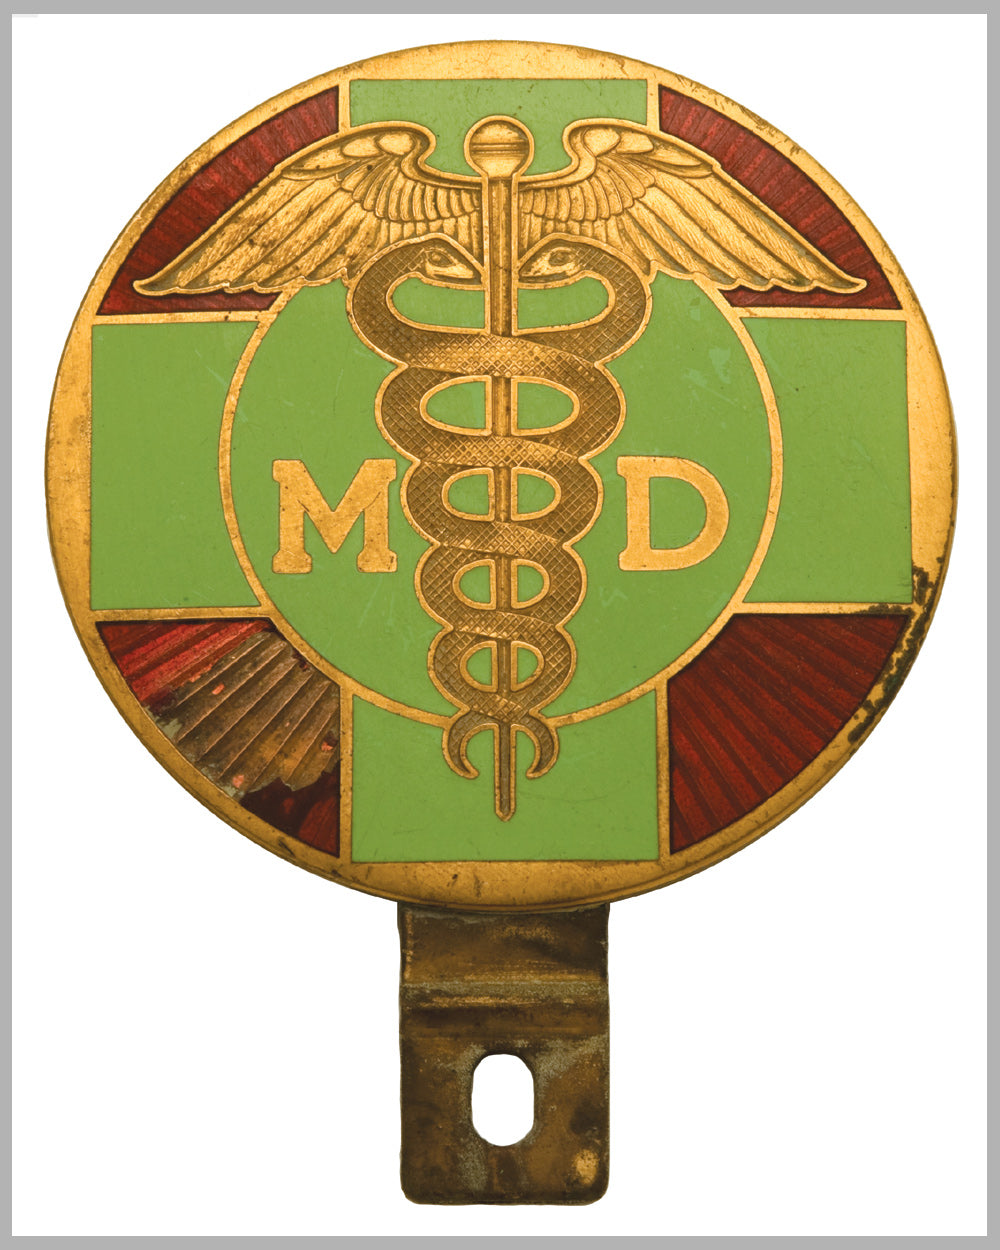 M.D. Doctors license plate topper badge